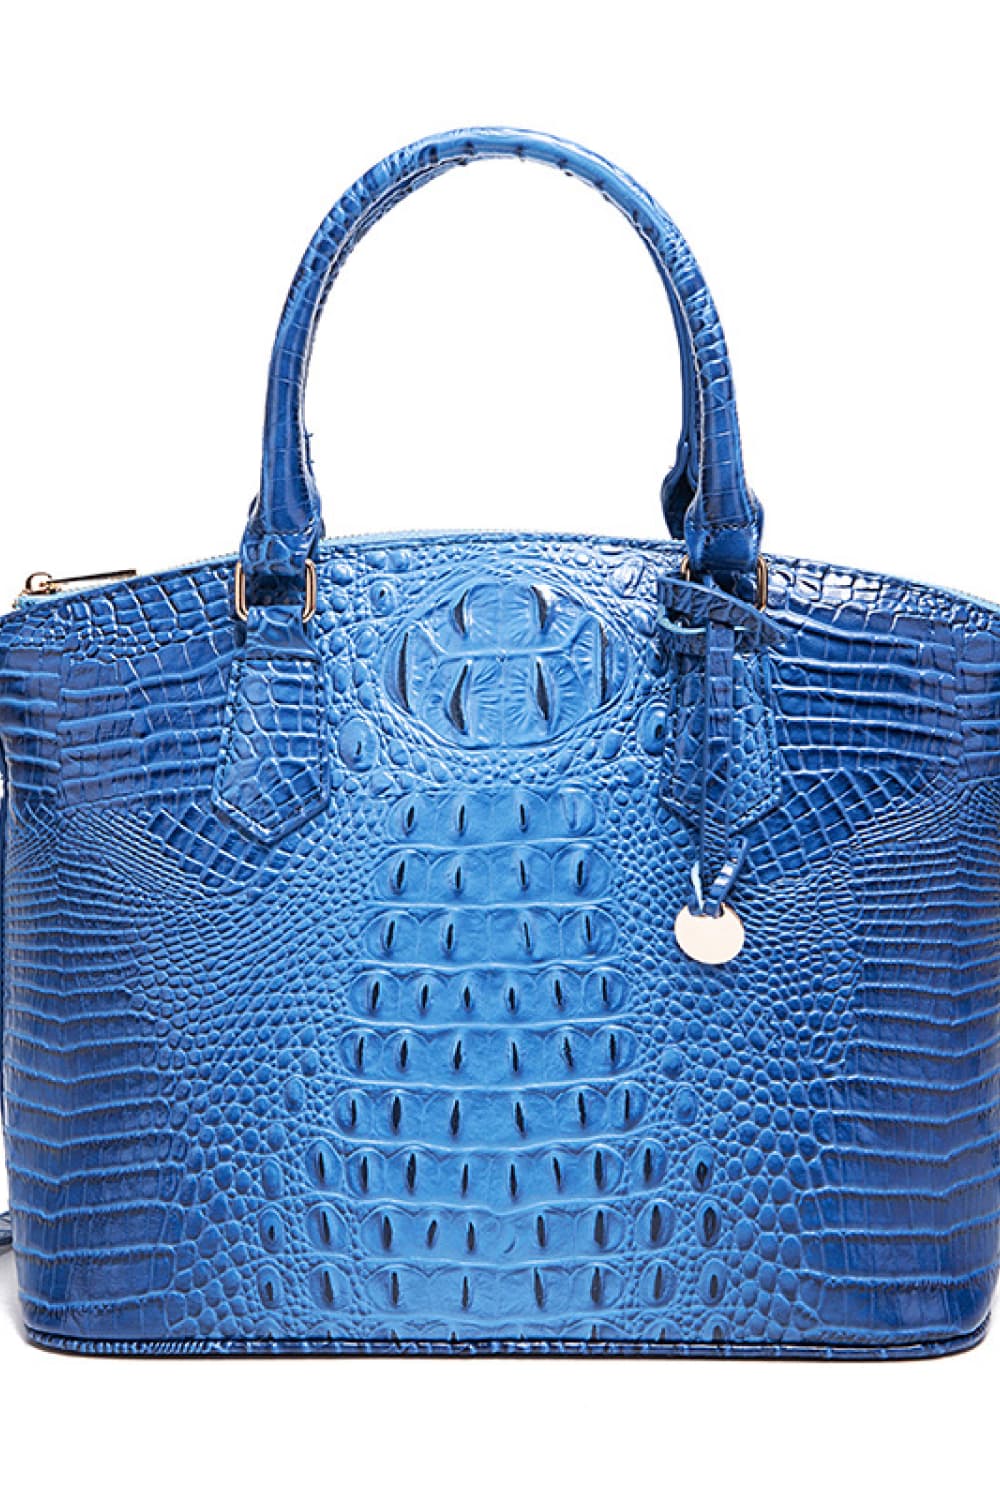 PU Leather Handbag BLUE ZONE PLANET